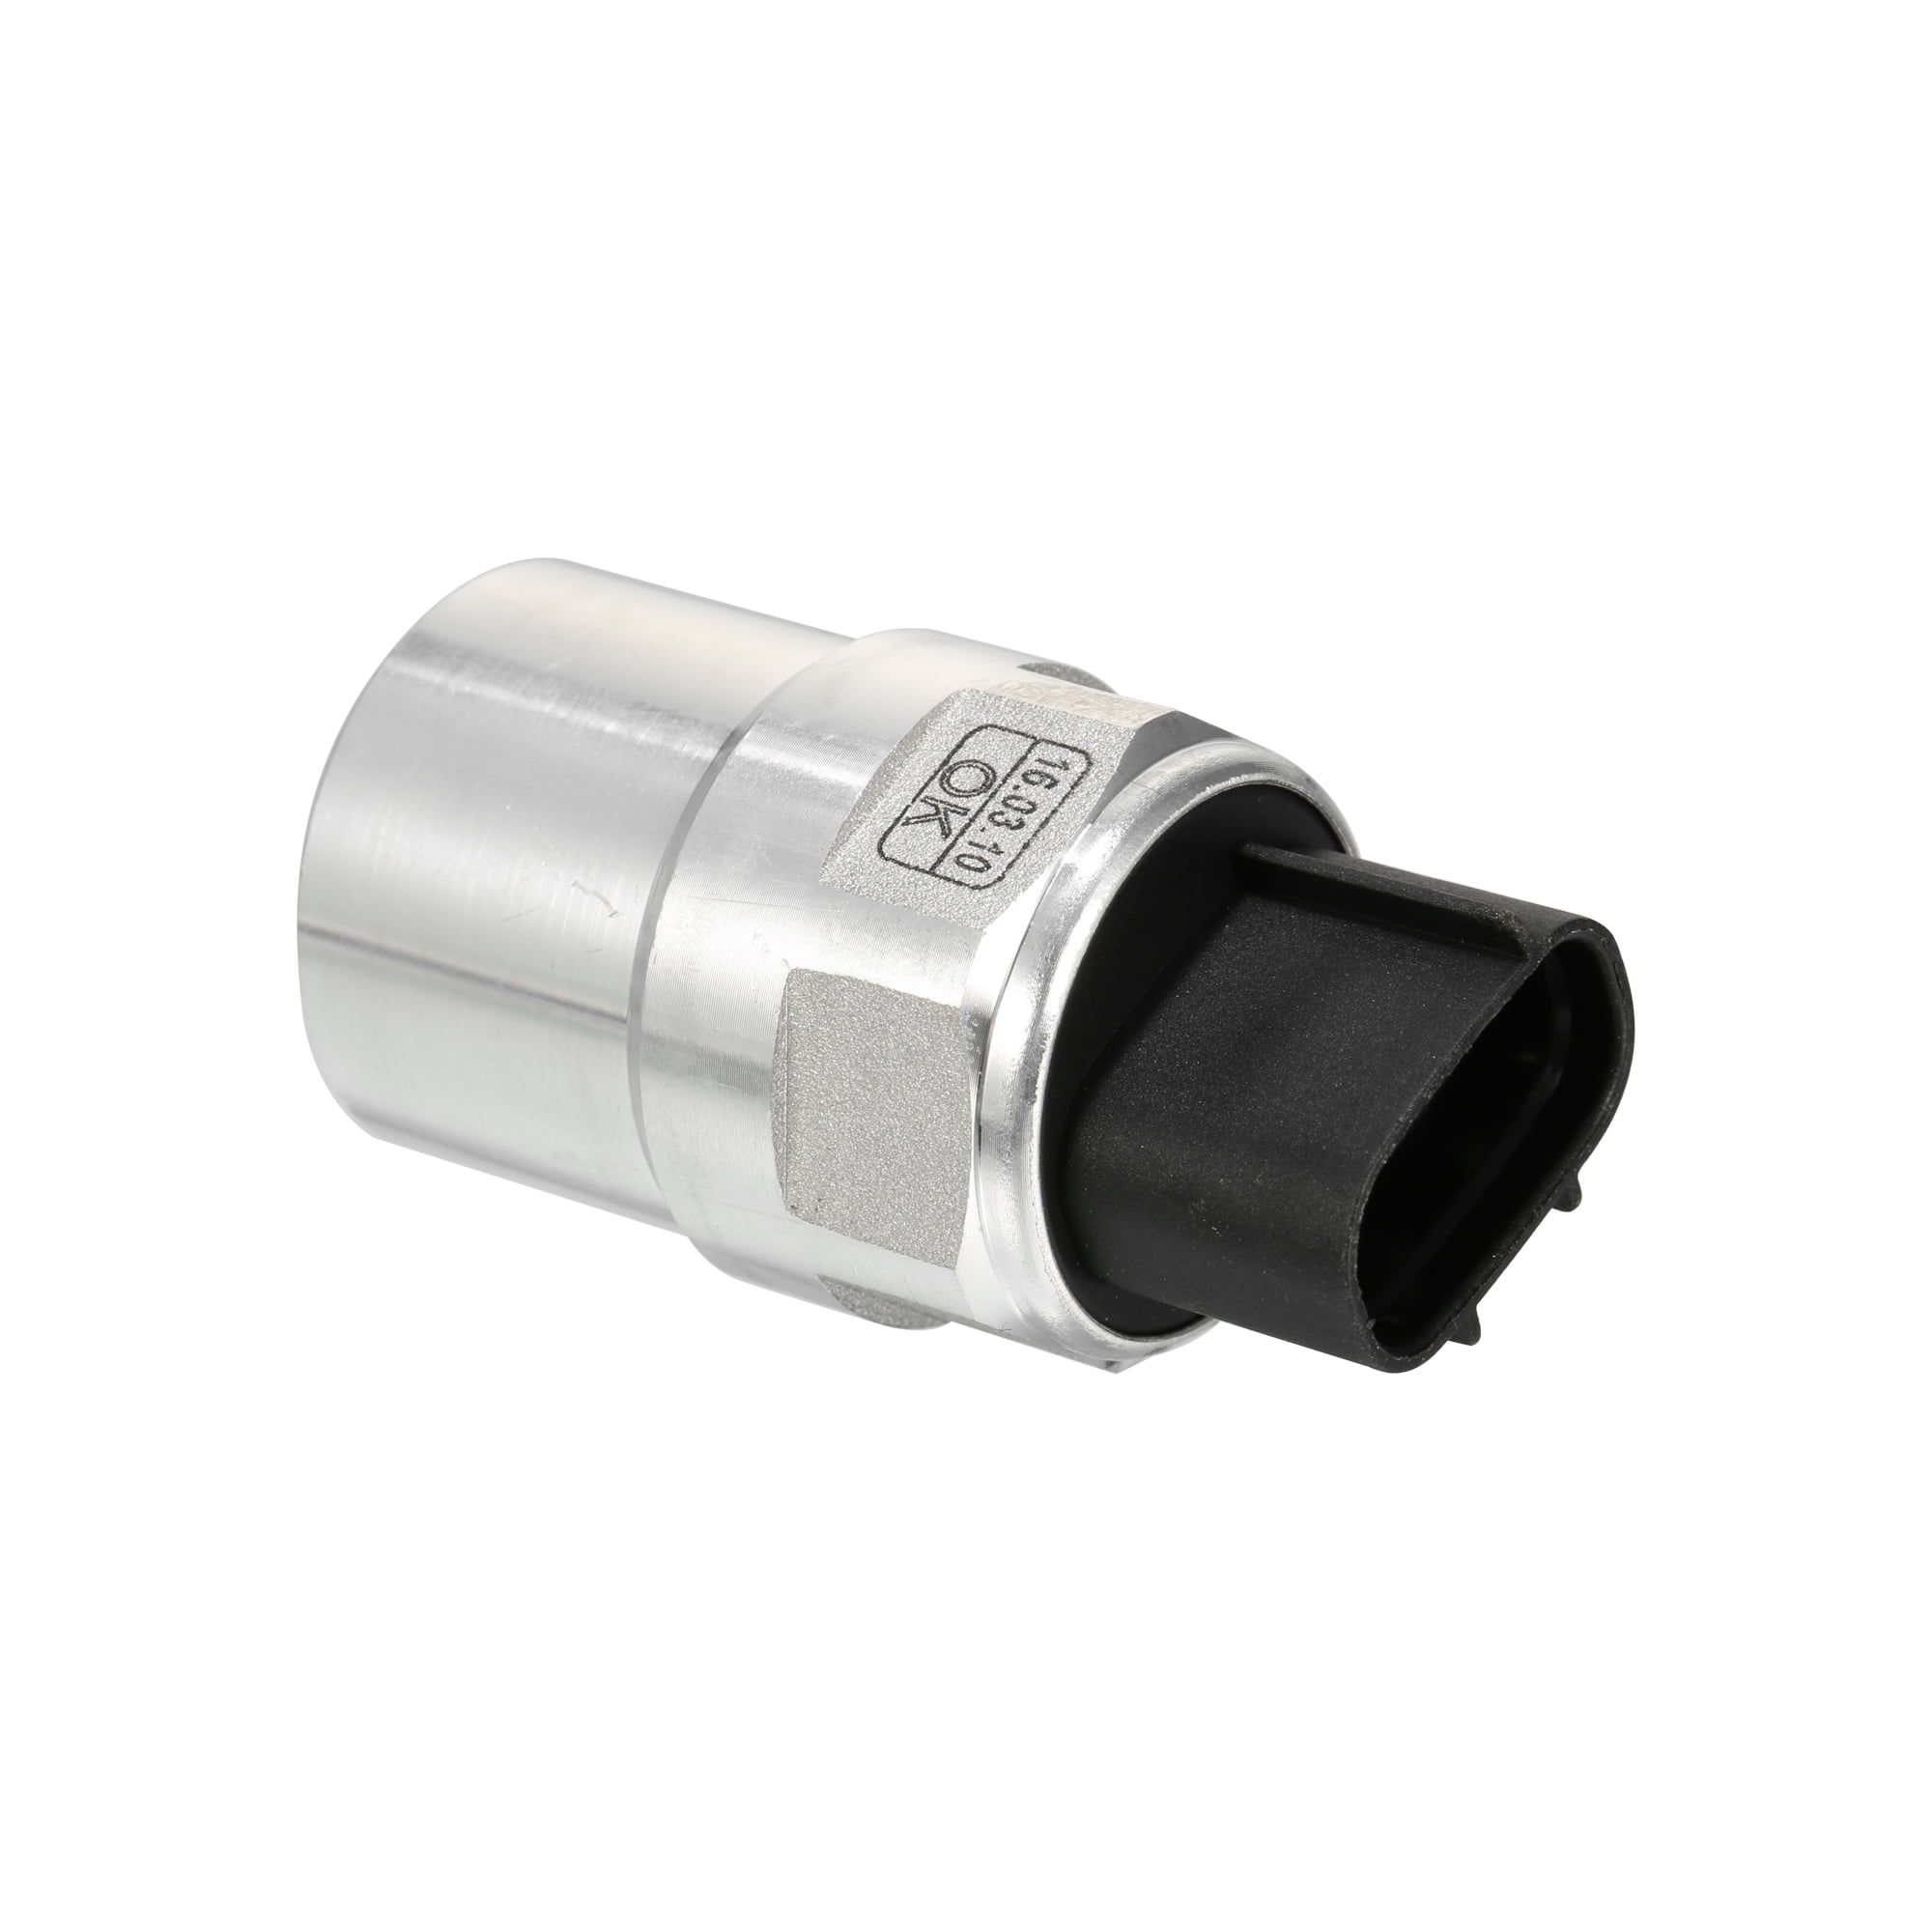 Unique Bargains Transmission Speed Sensor for Mitsubishi Canter MR750084  3pins ABS Metal Black Silver Tone